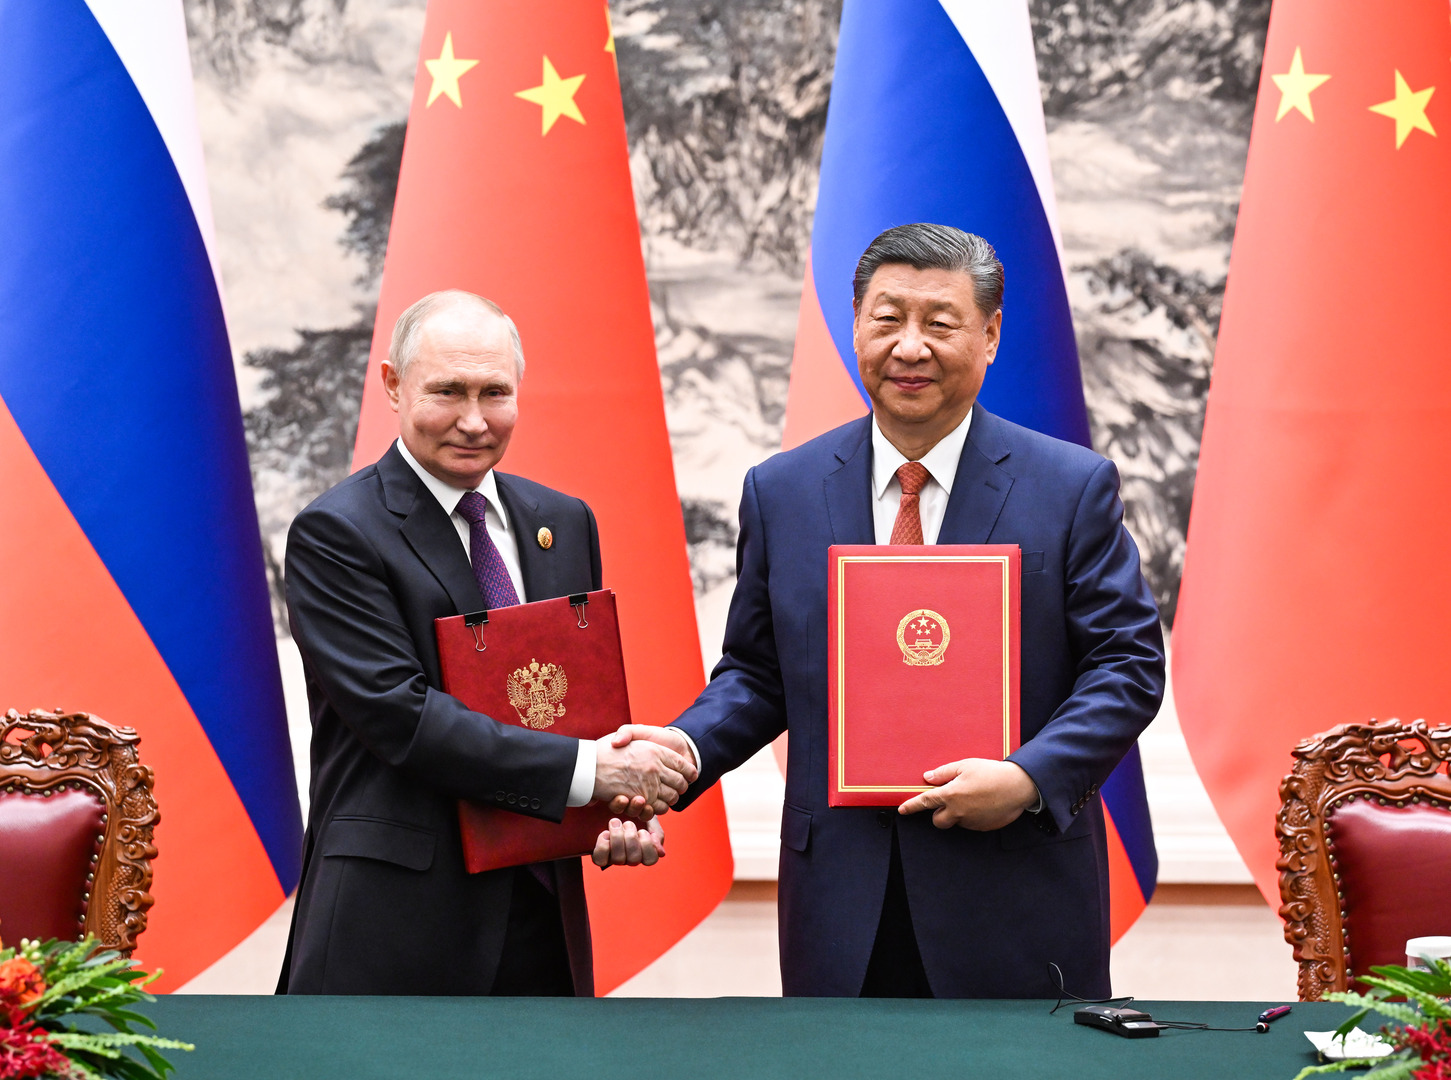 انطلاق مؤتمر للتعاون بين روسيا والصين في موسكو